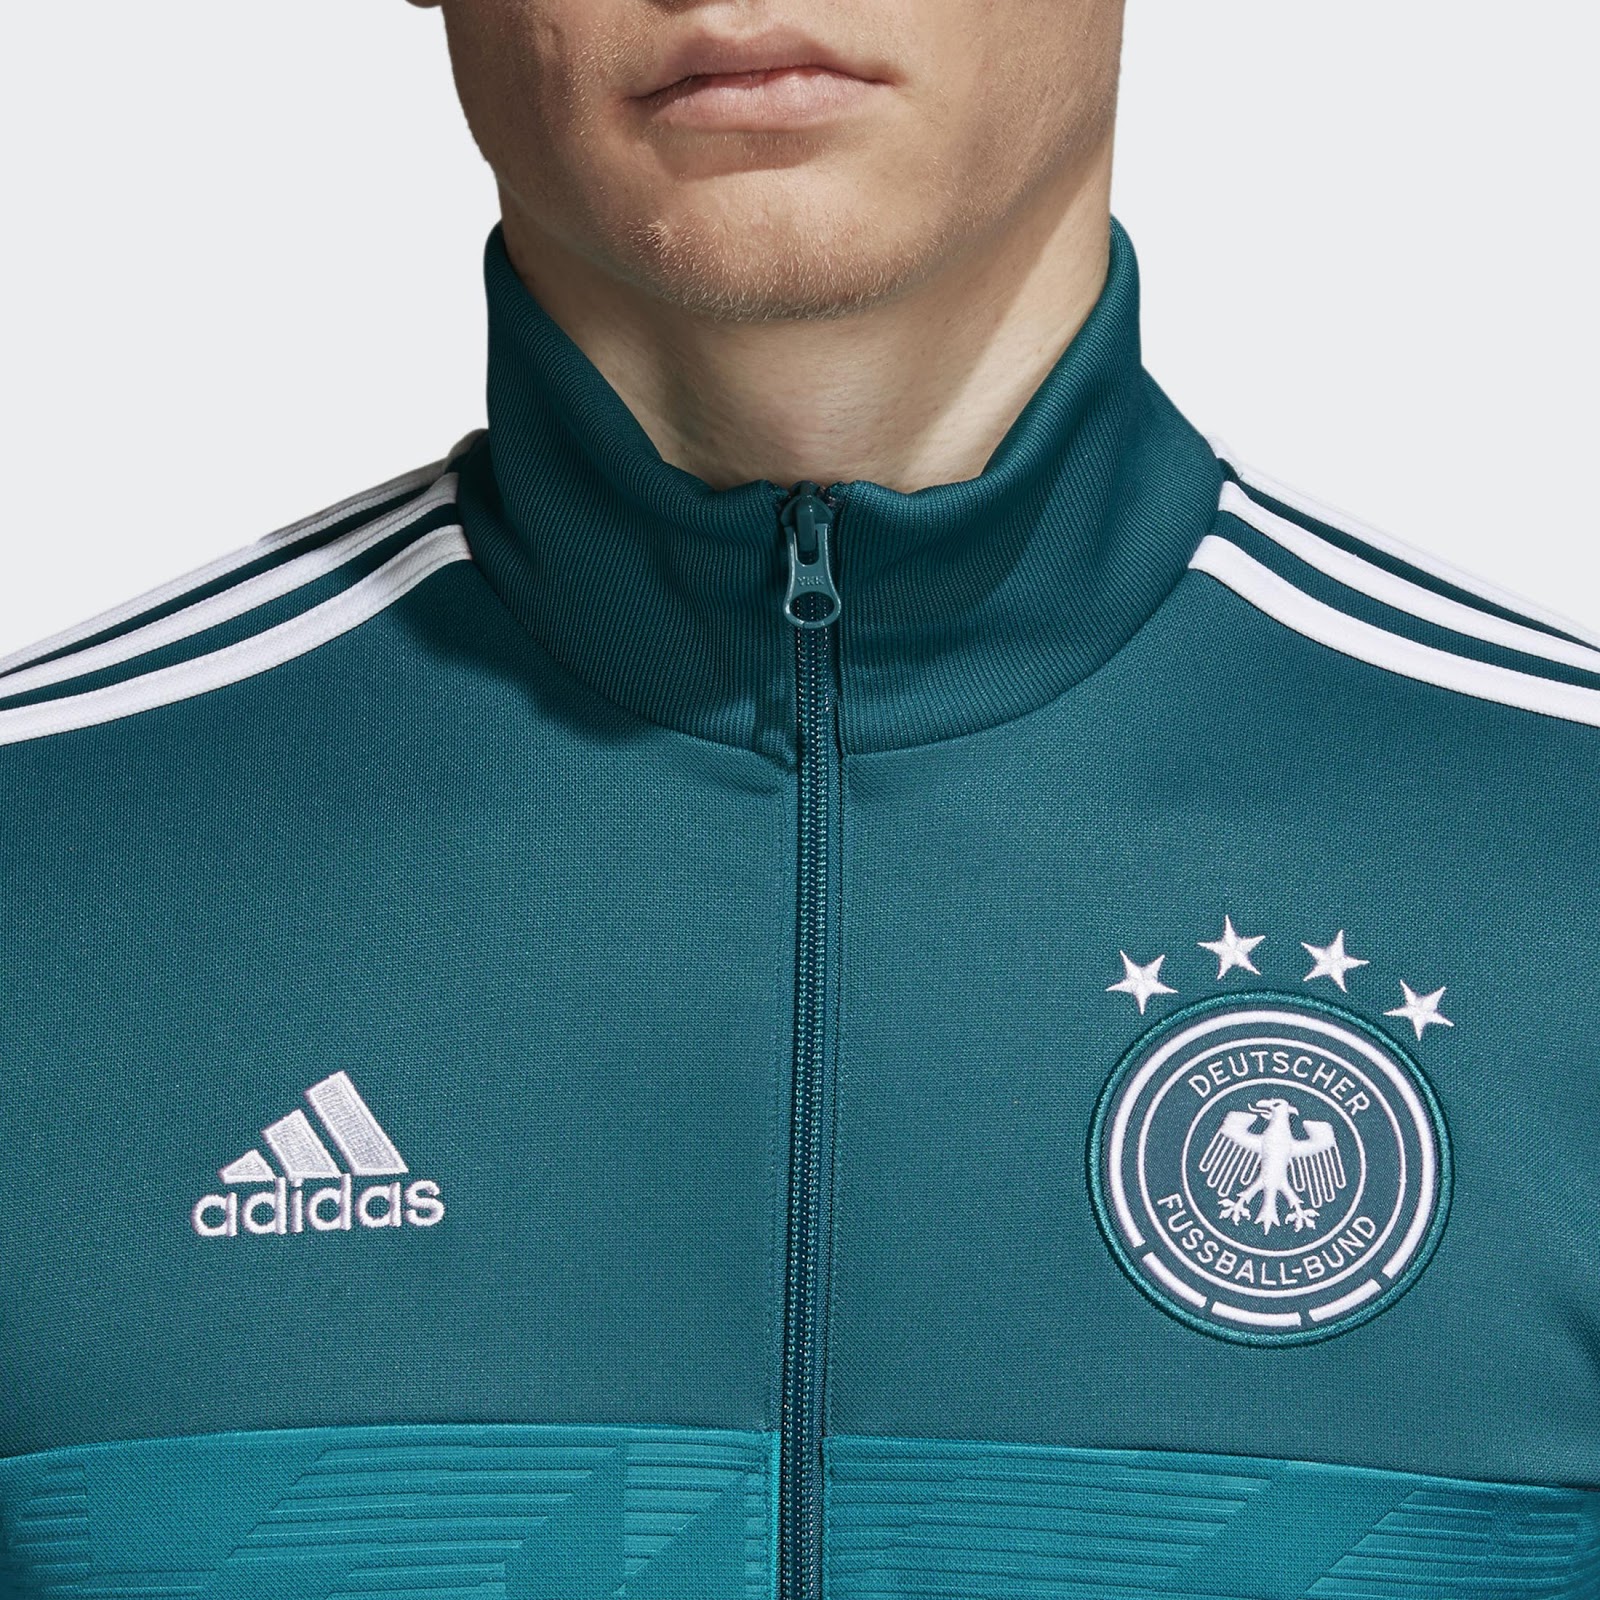 Адидас сборная германии. Олимпийка адидас сборная Германии. Олимпийка адидас Дойчланд. Adidas Deutschland олимпийка. Adidas Germany Jacket 2022 World Cup.